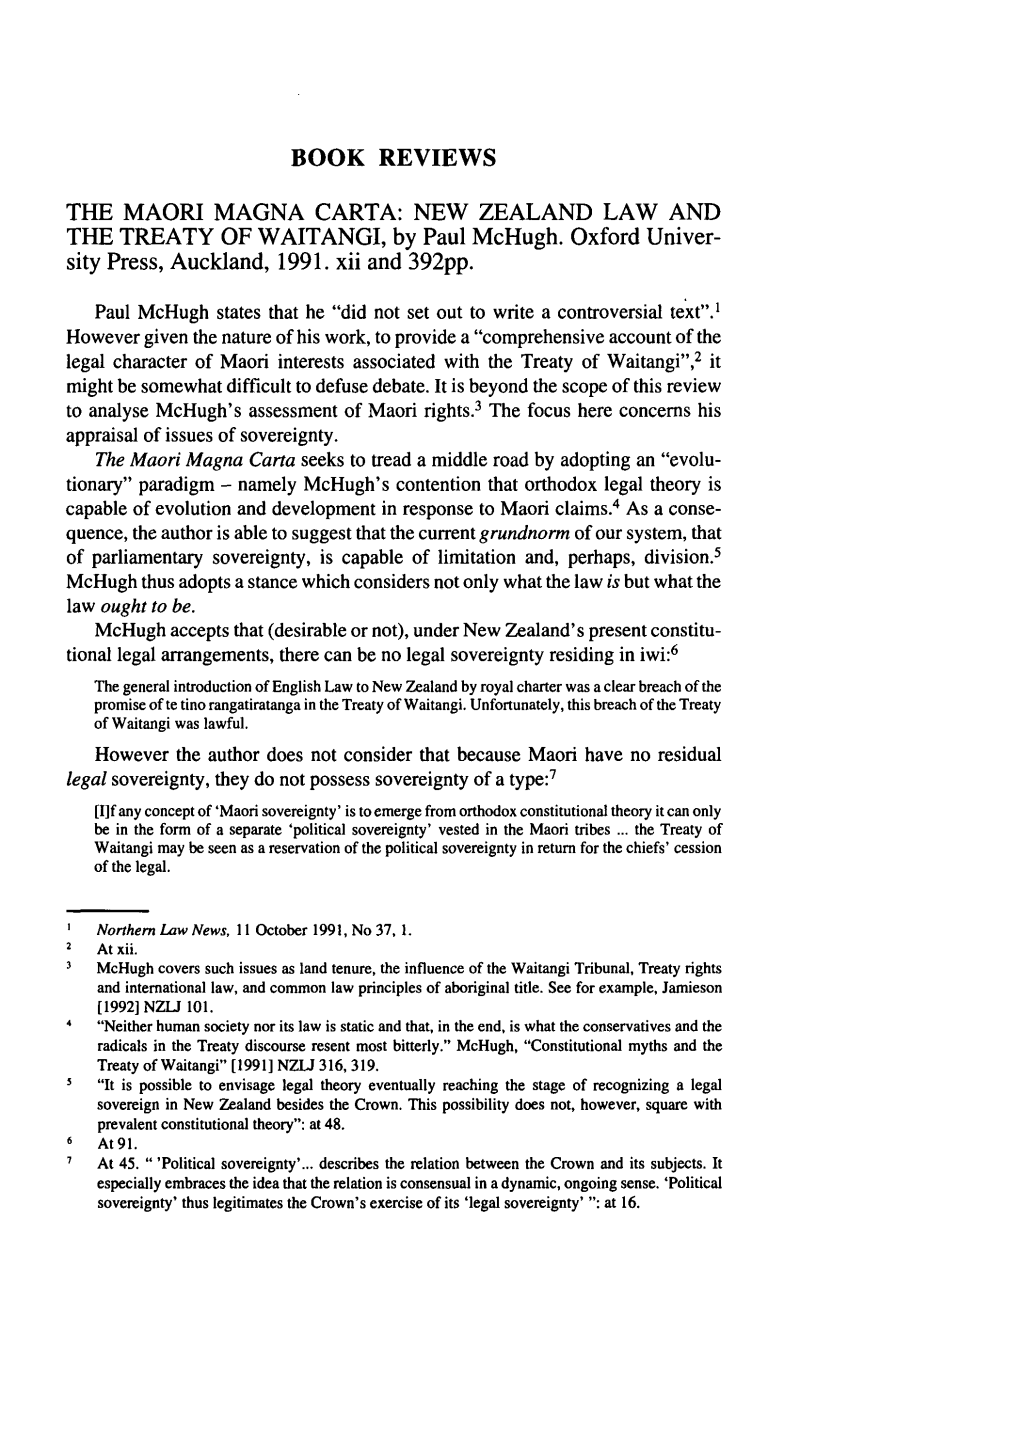 Book Reviews the Maori Magna Carta: New Zealand Law